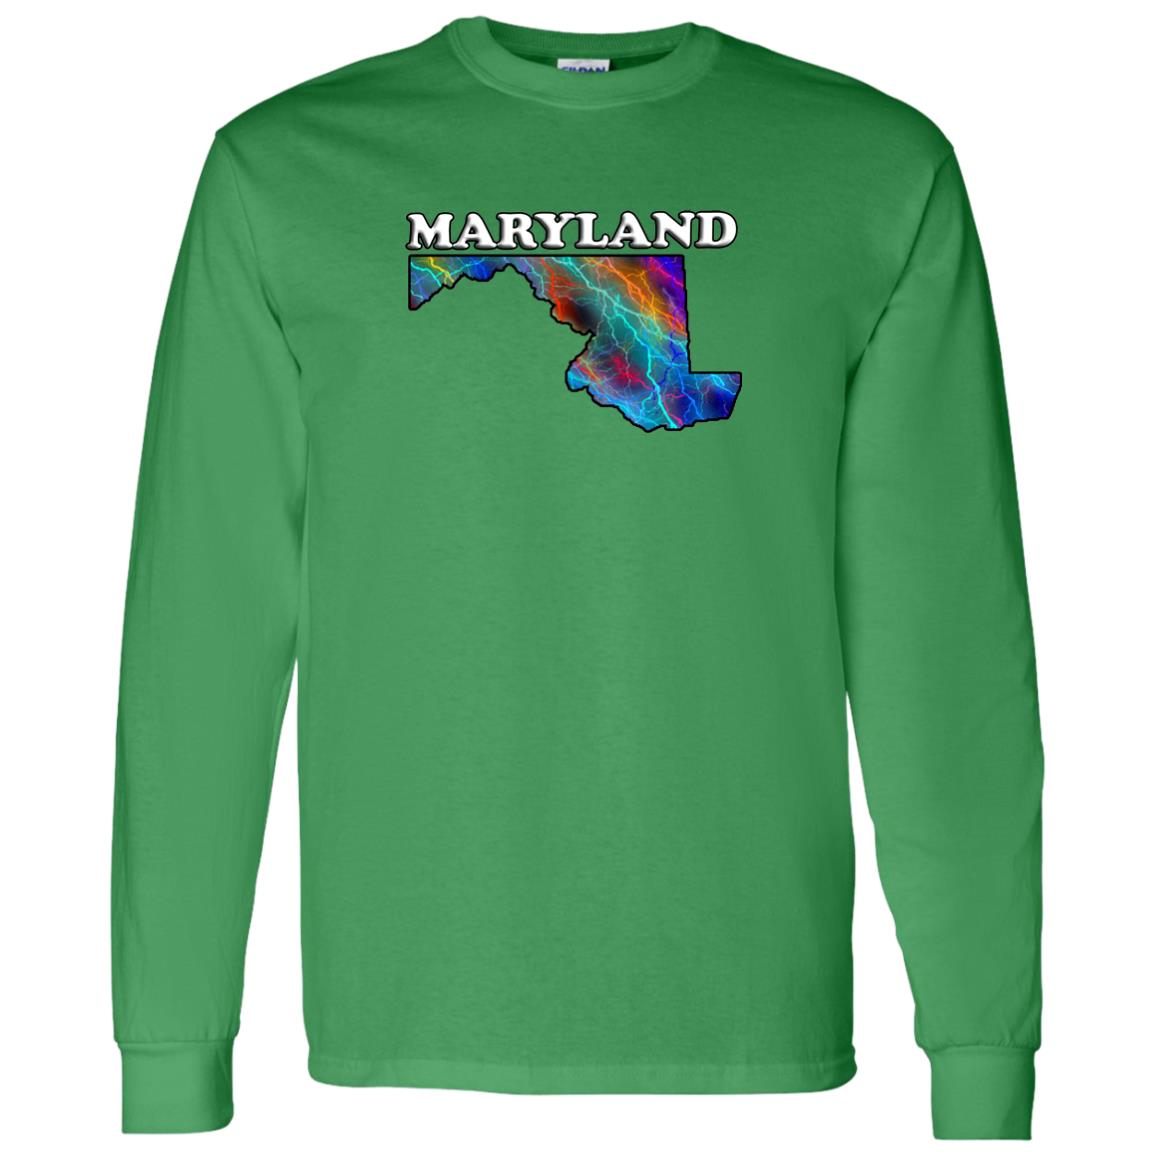 Maryland Long Sleeve T-shirt